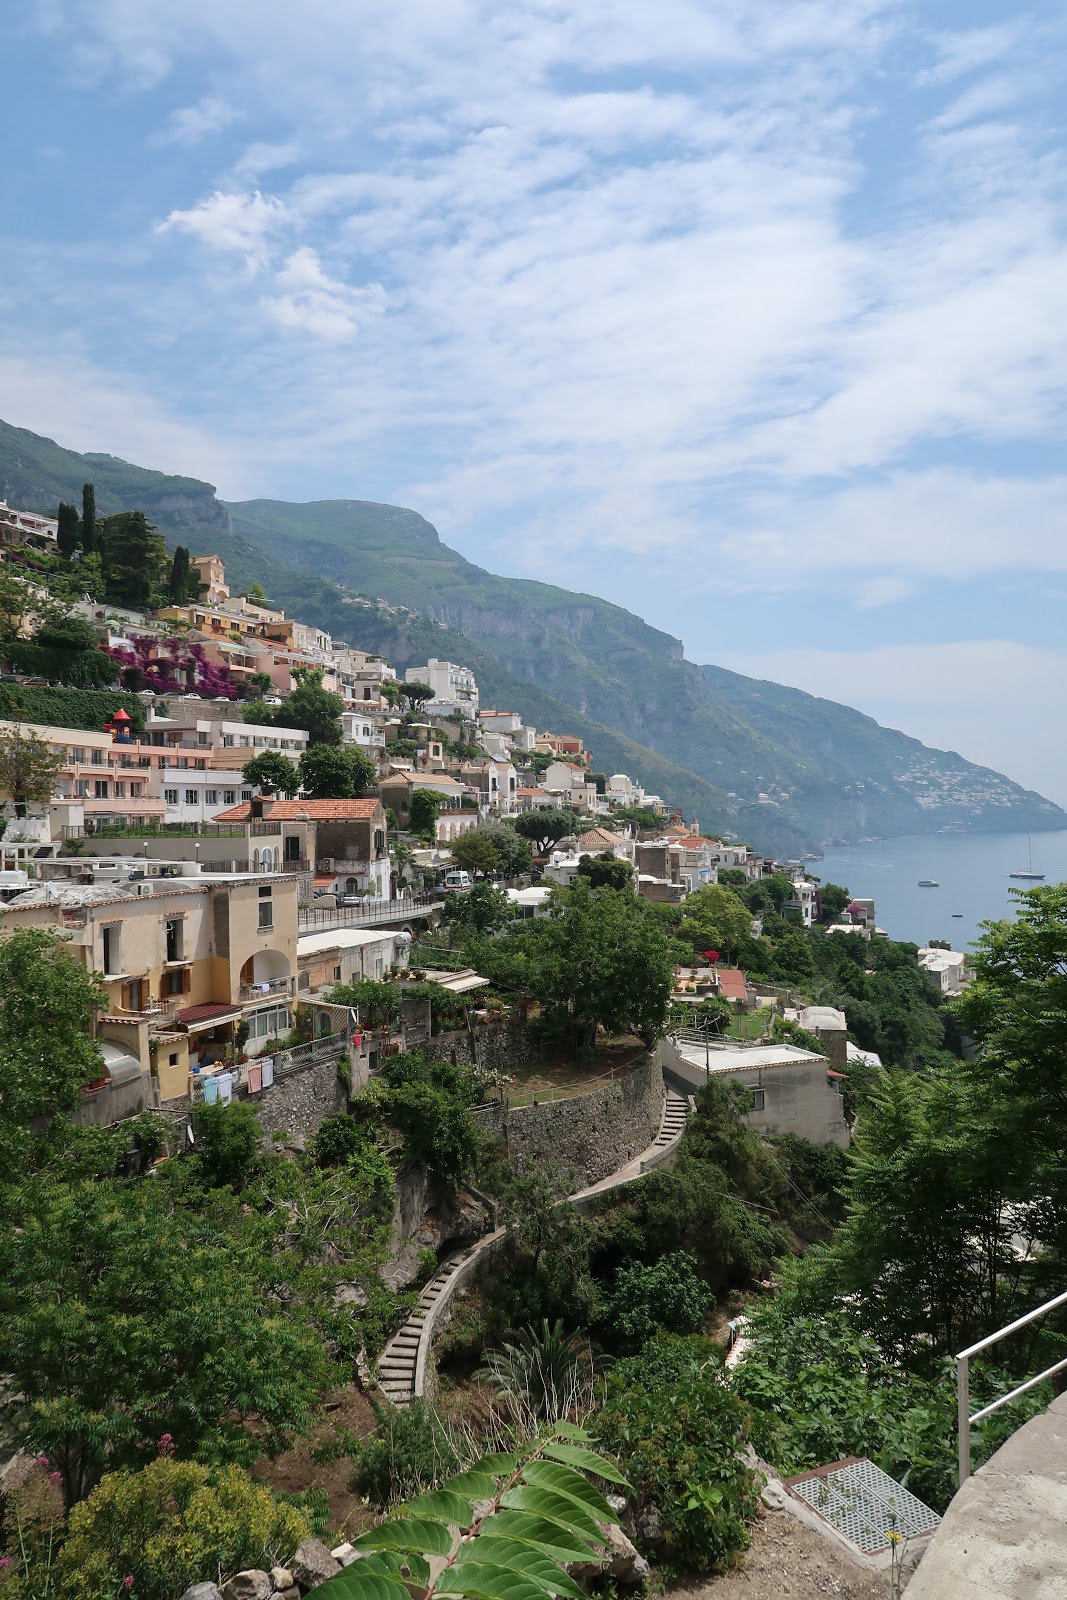 Travel Series: Minori + The Amalfi Coast - allergic to vanilla